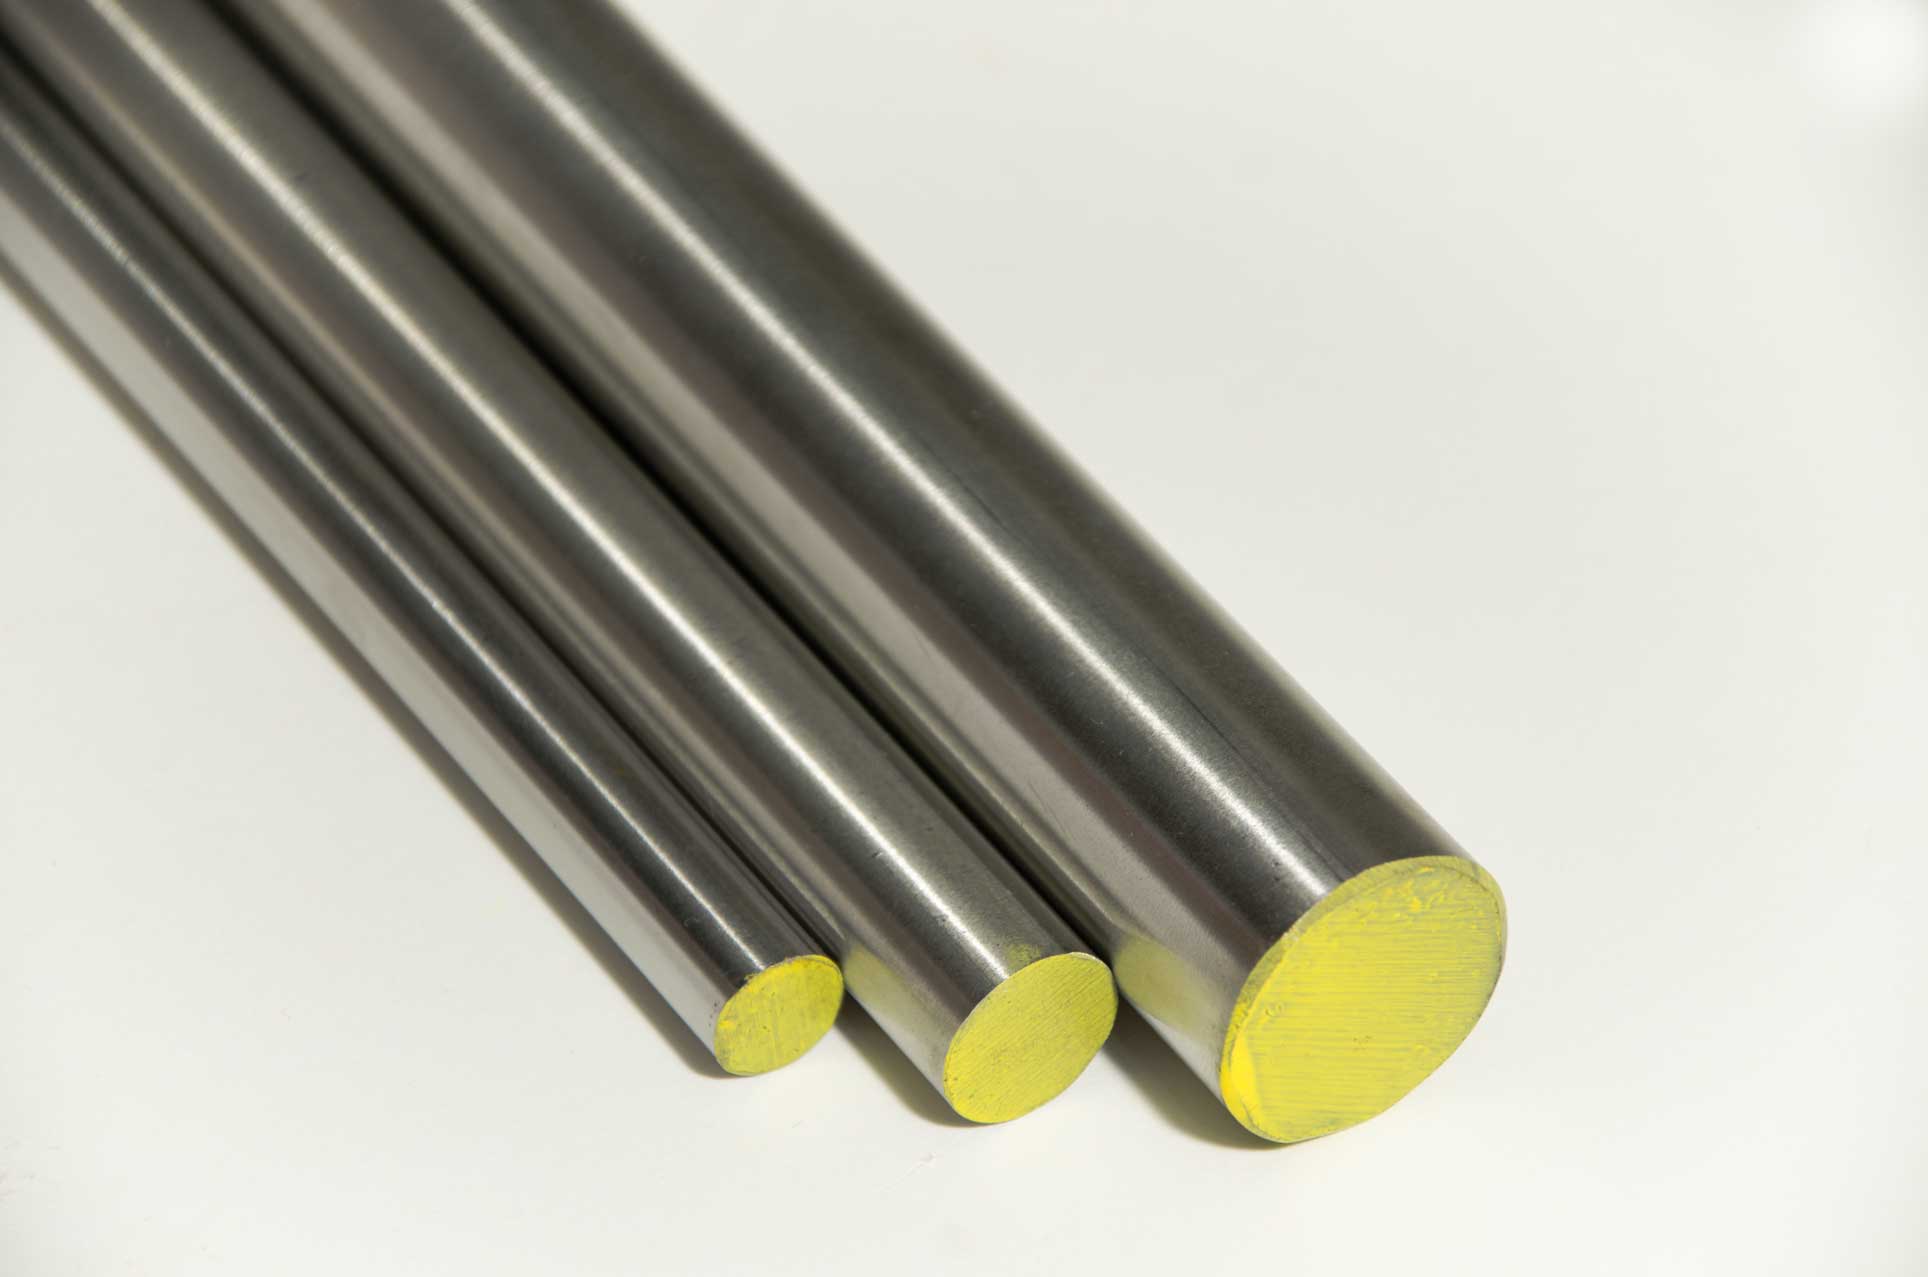 Precision Ground 36 Length Precision Tolerance Polished Finish 9/32 Diameter O1 Tool Steel Round Rod